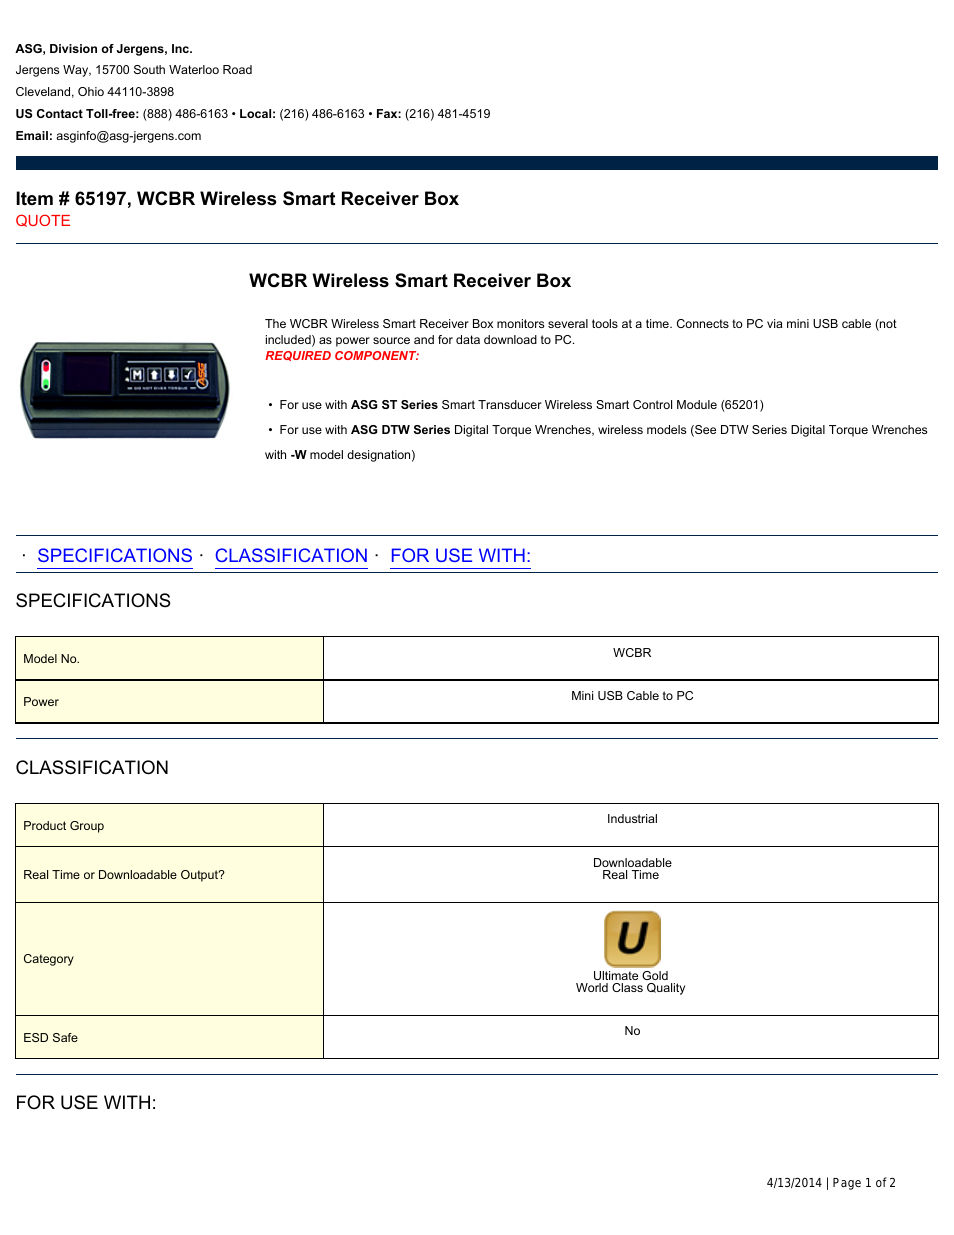 65197 WCBR Wireless Smart Receiver Box